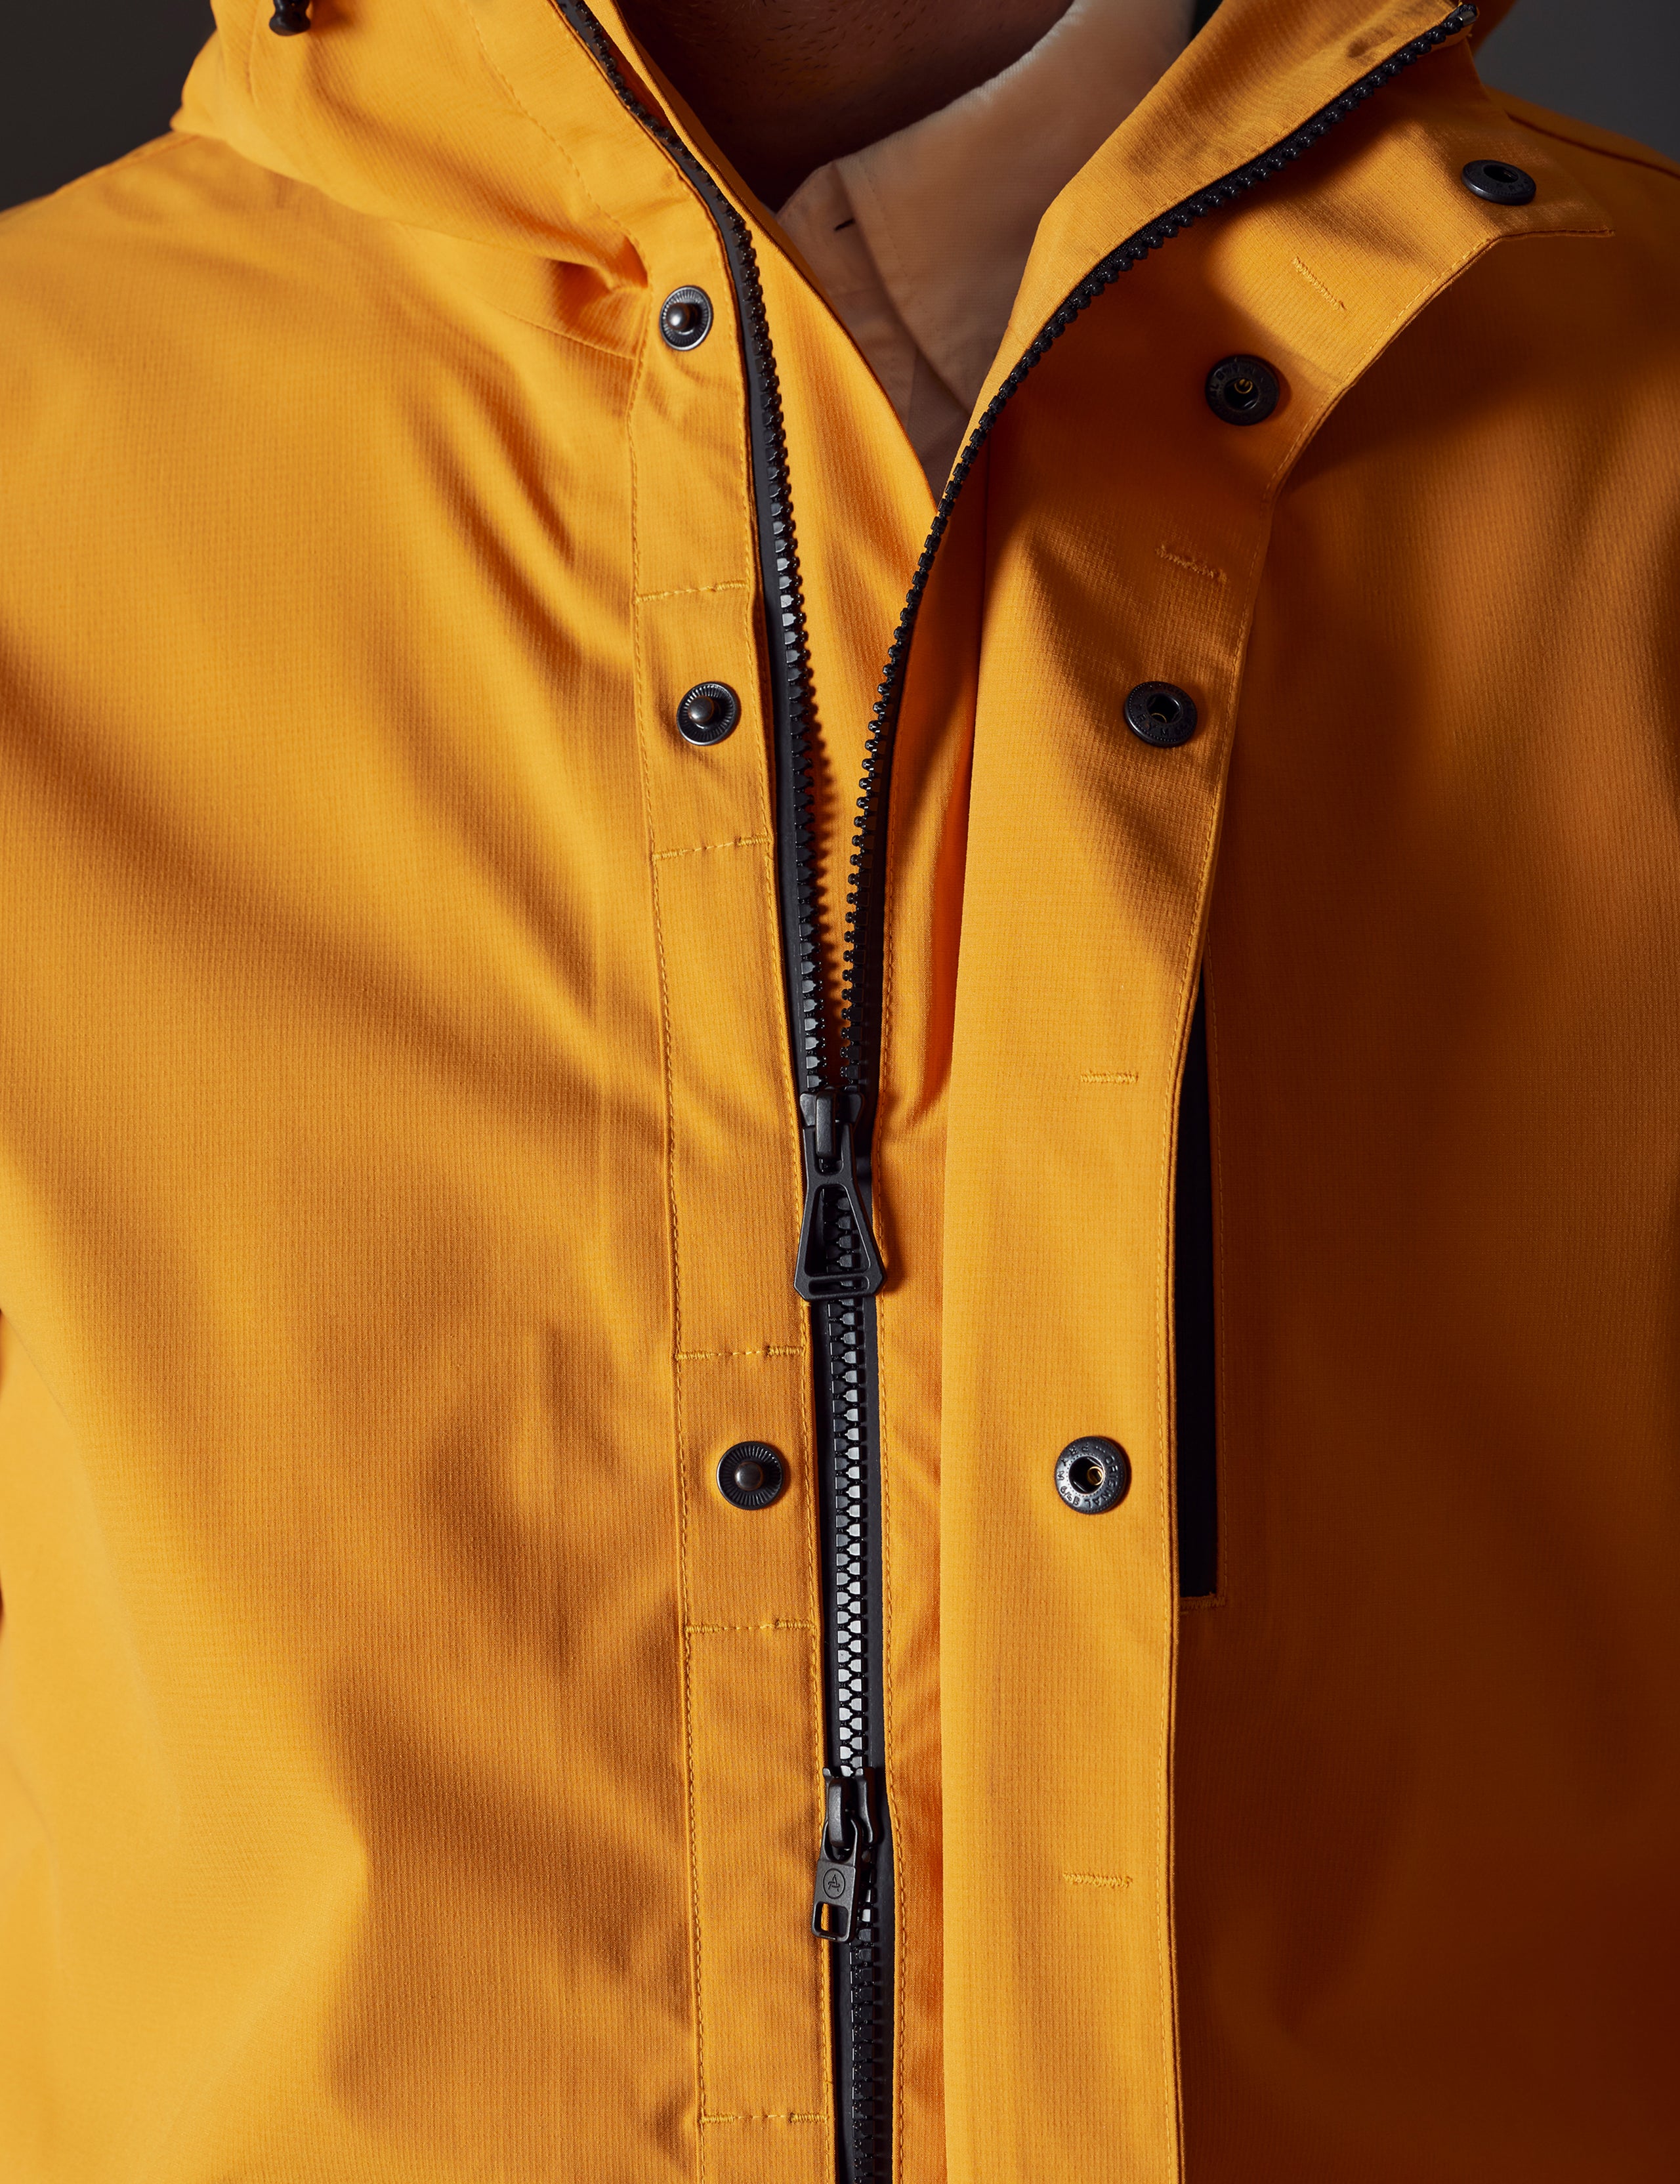 Men's orange rain jacket from AETHER Apparel